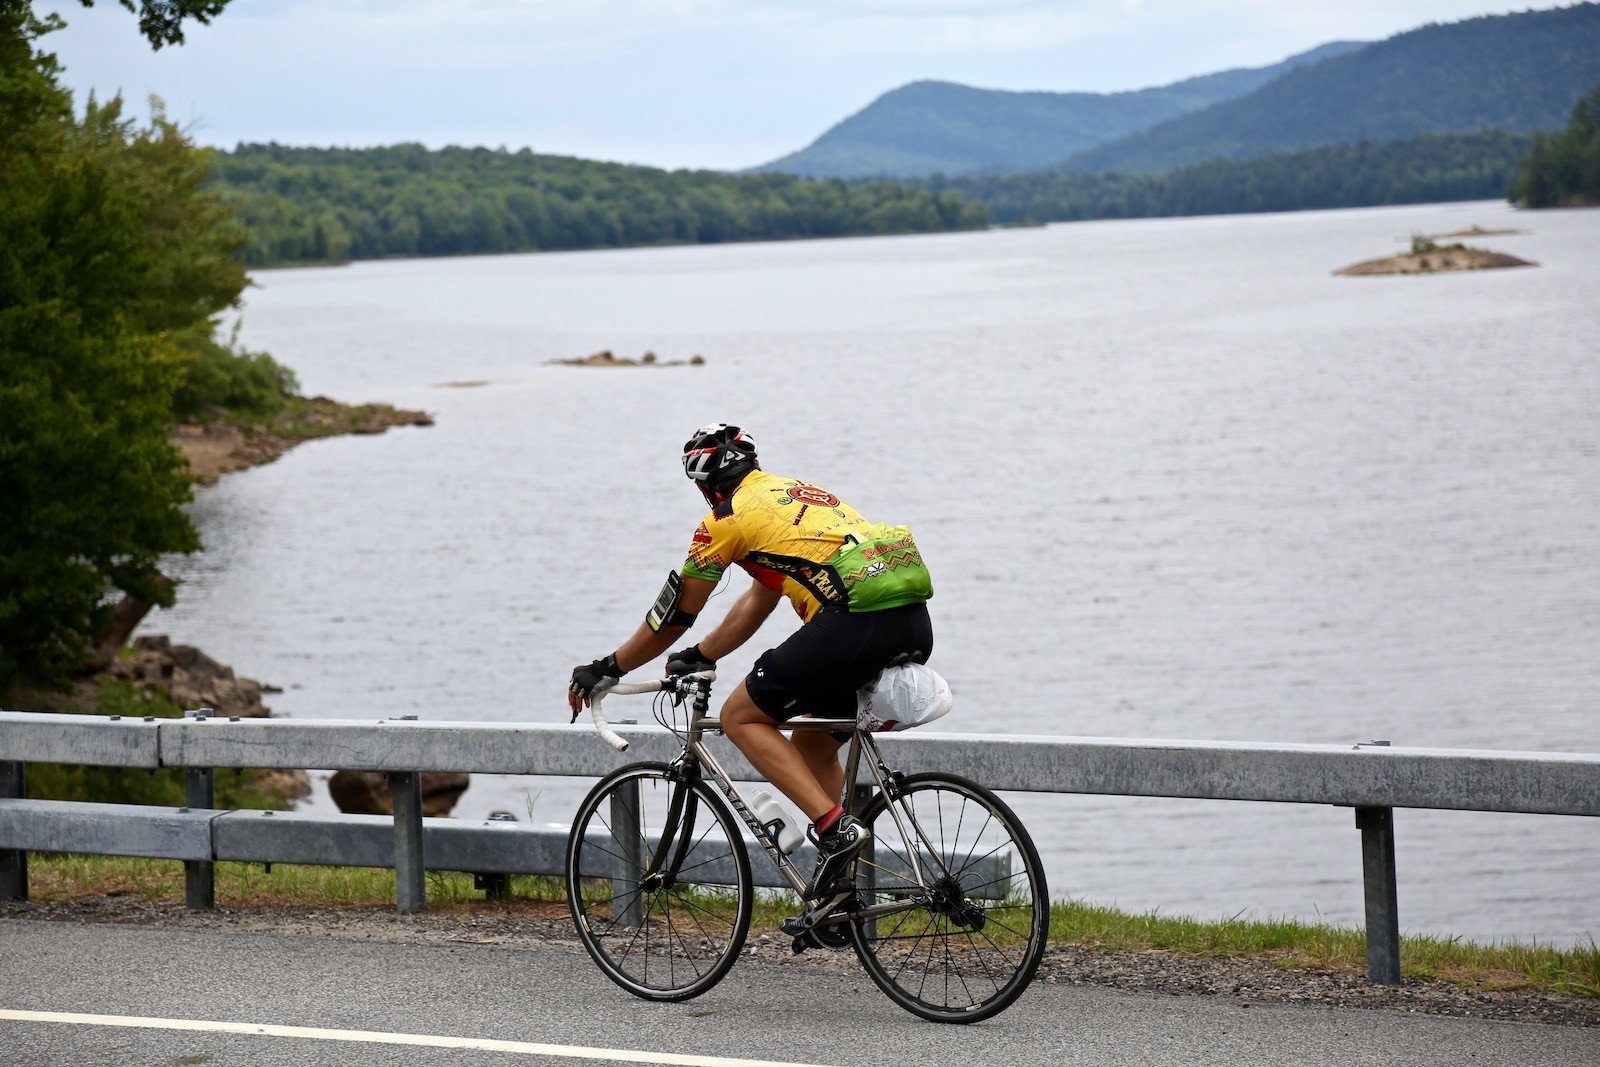 The ididaride! A 75-mile Bike Tour of the Adirondack Park – Pure Adirondacks